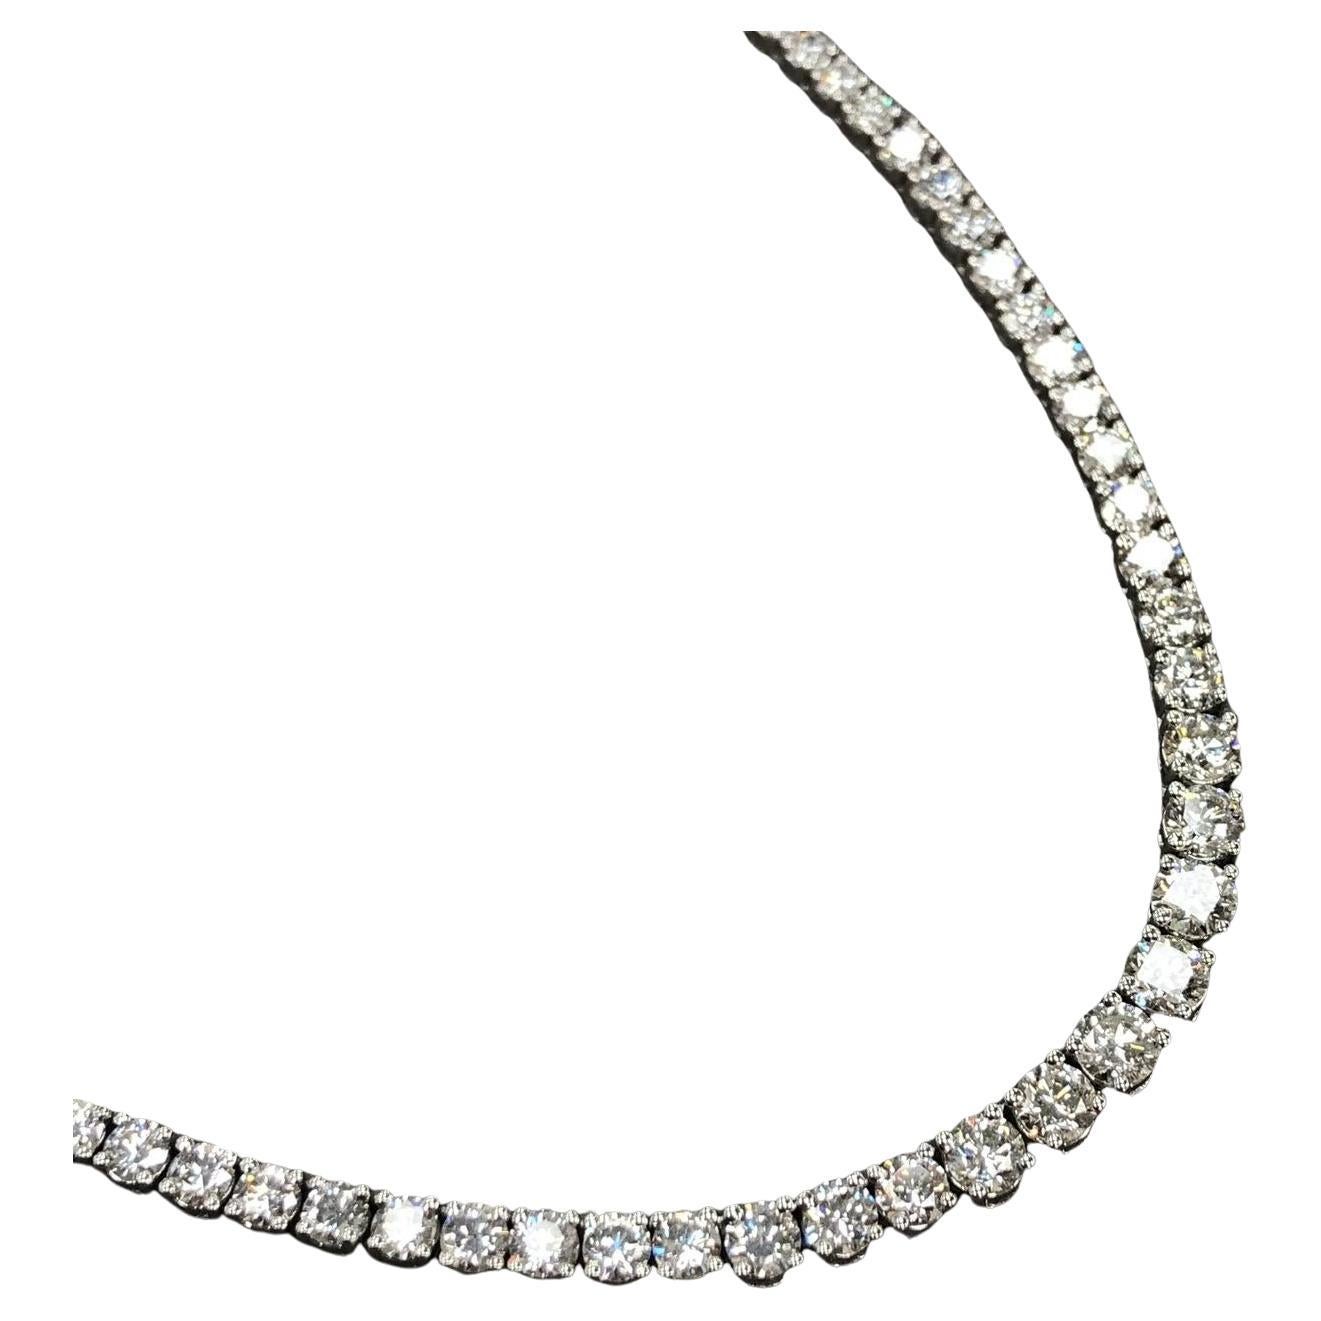 28 Carat Round Brilliant Cut Diamond Tennis Necklace Set in 18K White Gold For Sale